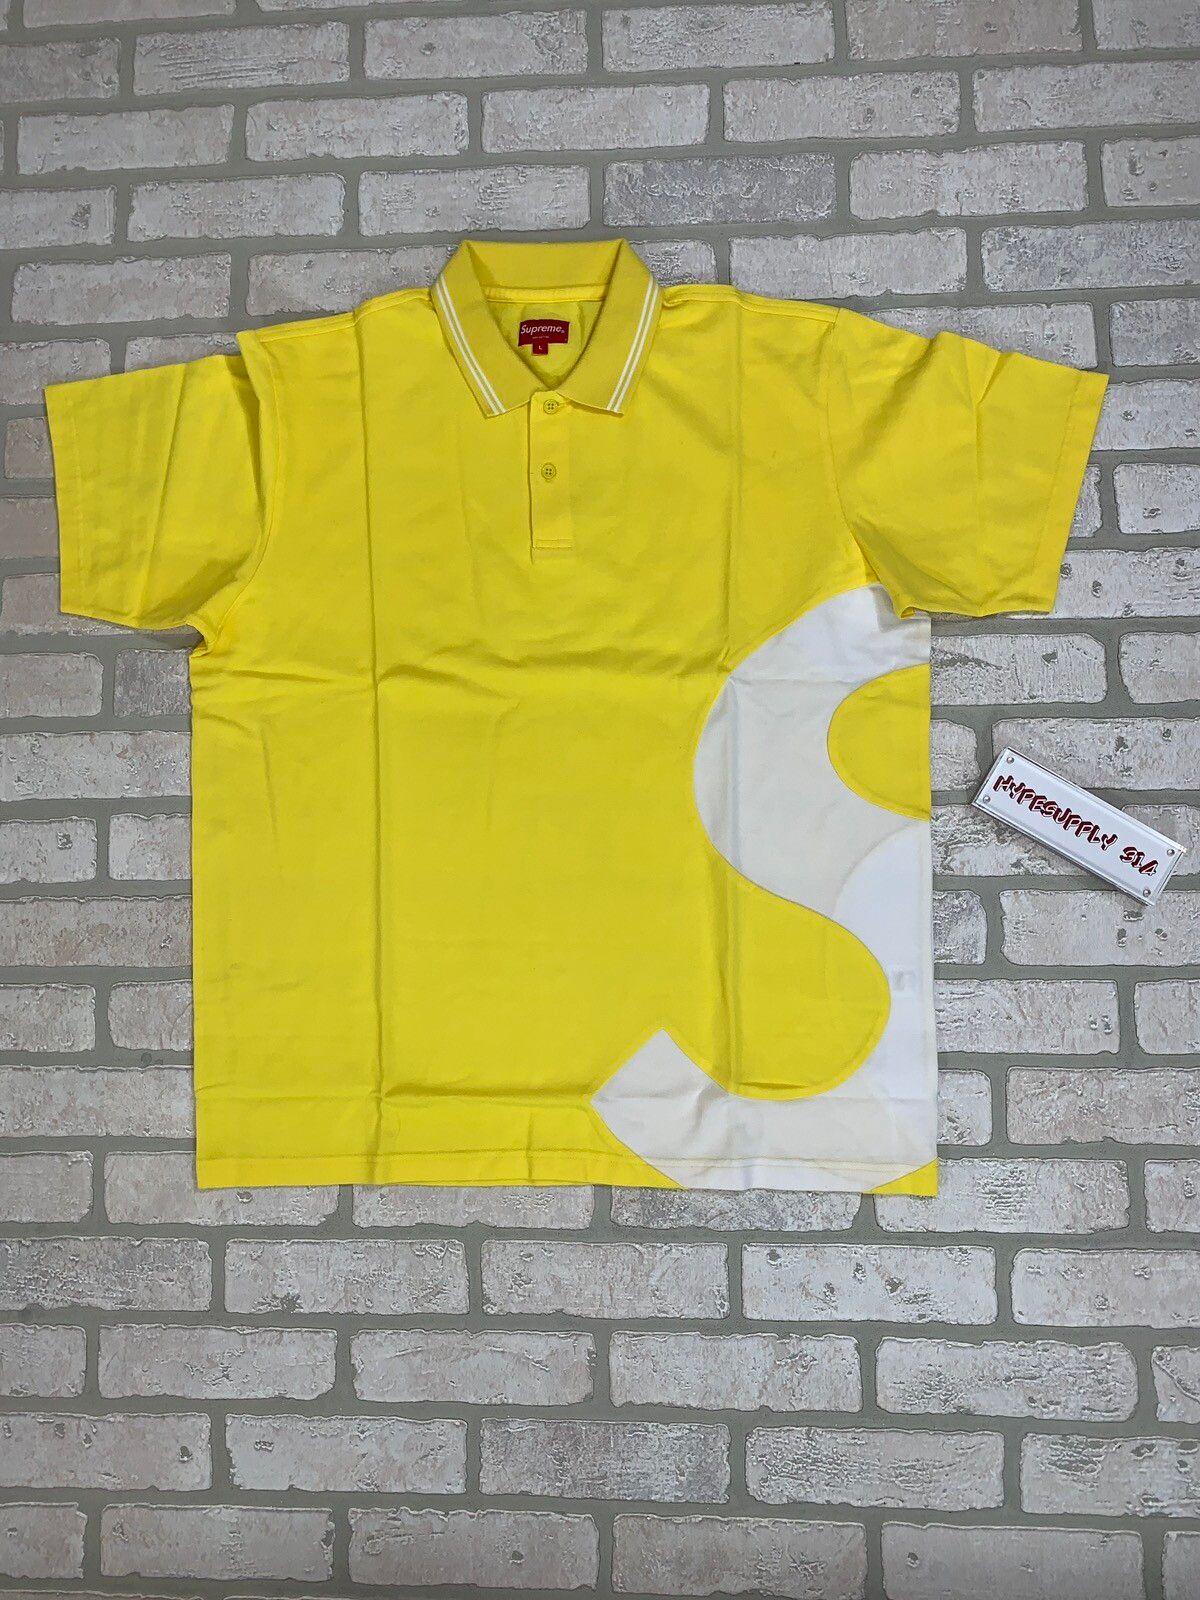 Supreme Supreme S logo Polo Yellow | Grailed